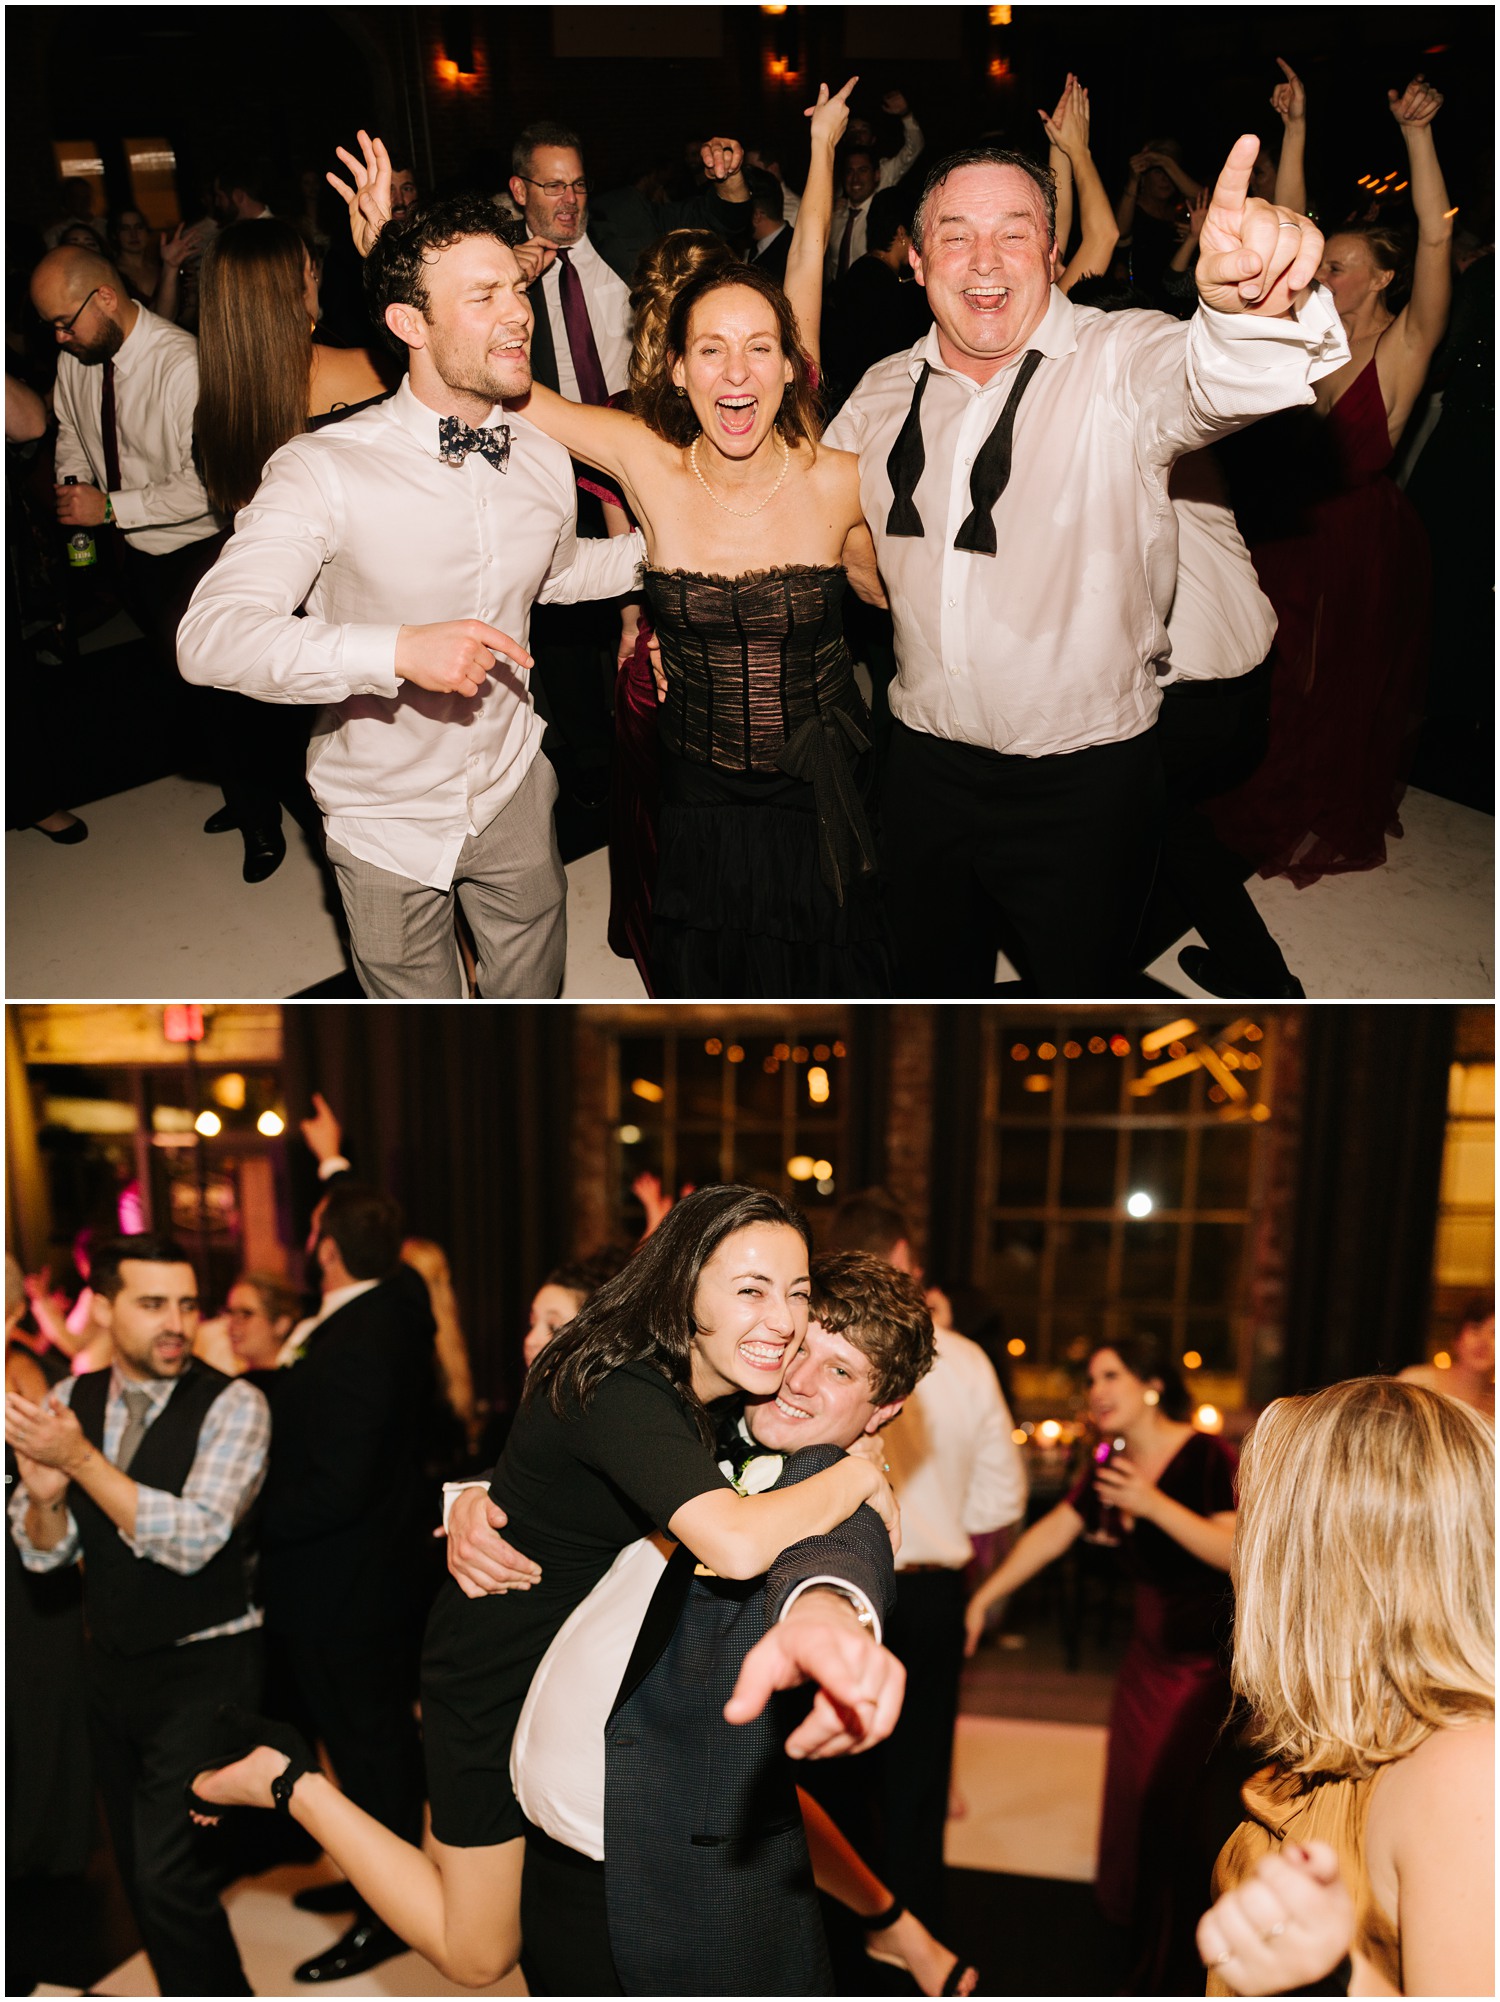 wedding guests enjoy dancing at Cadillac Service Garage wedding reception